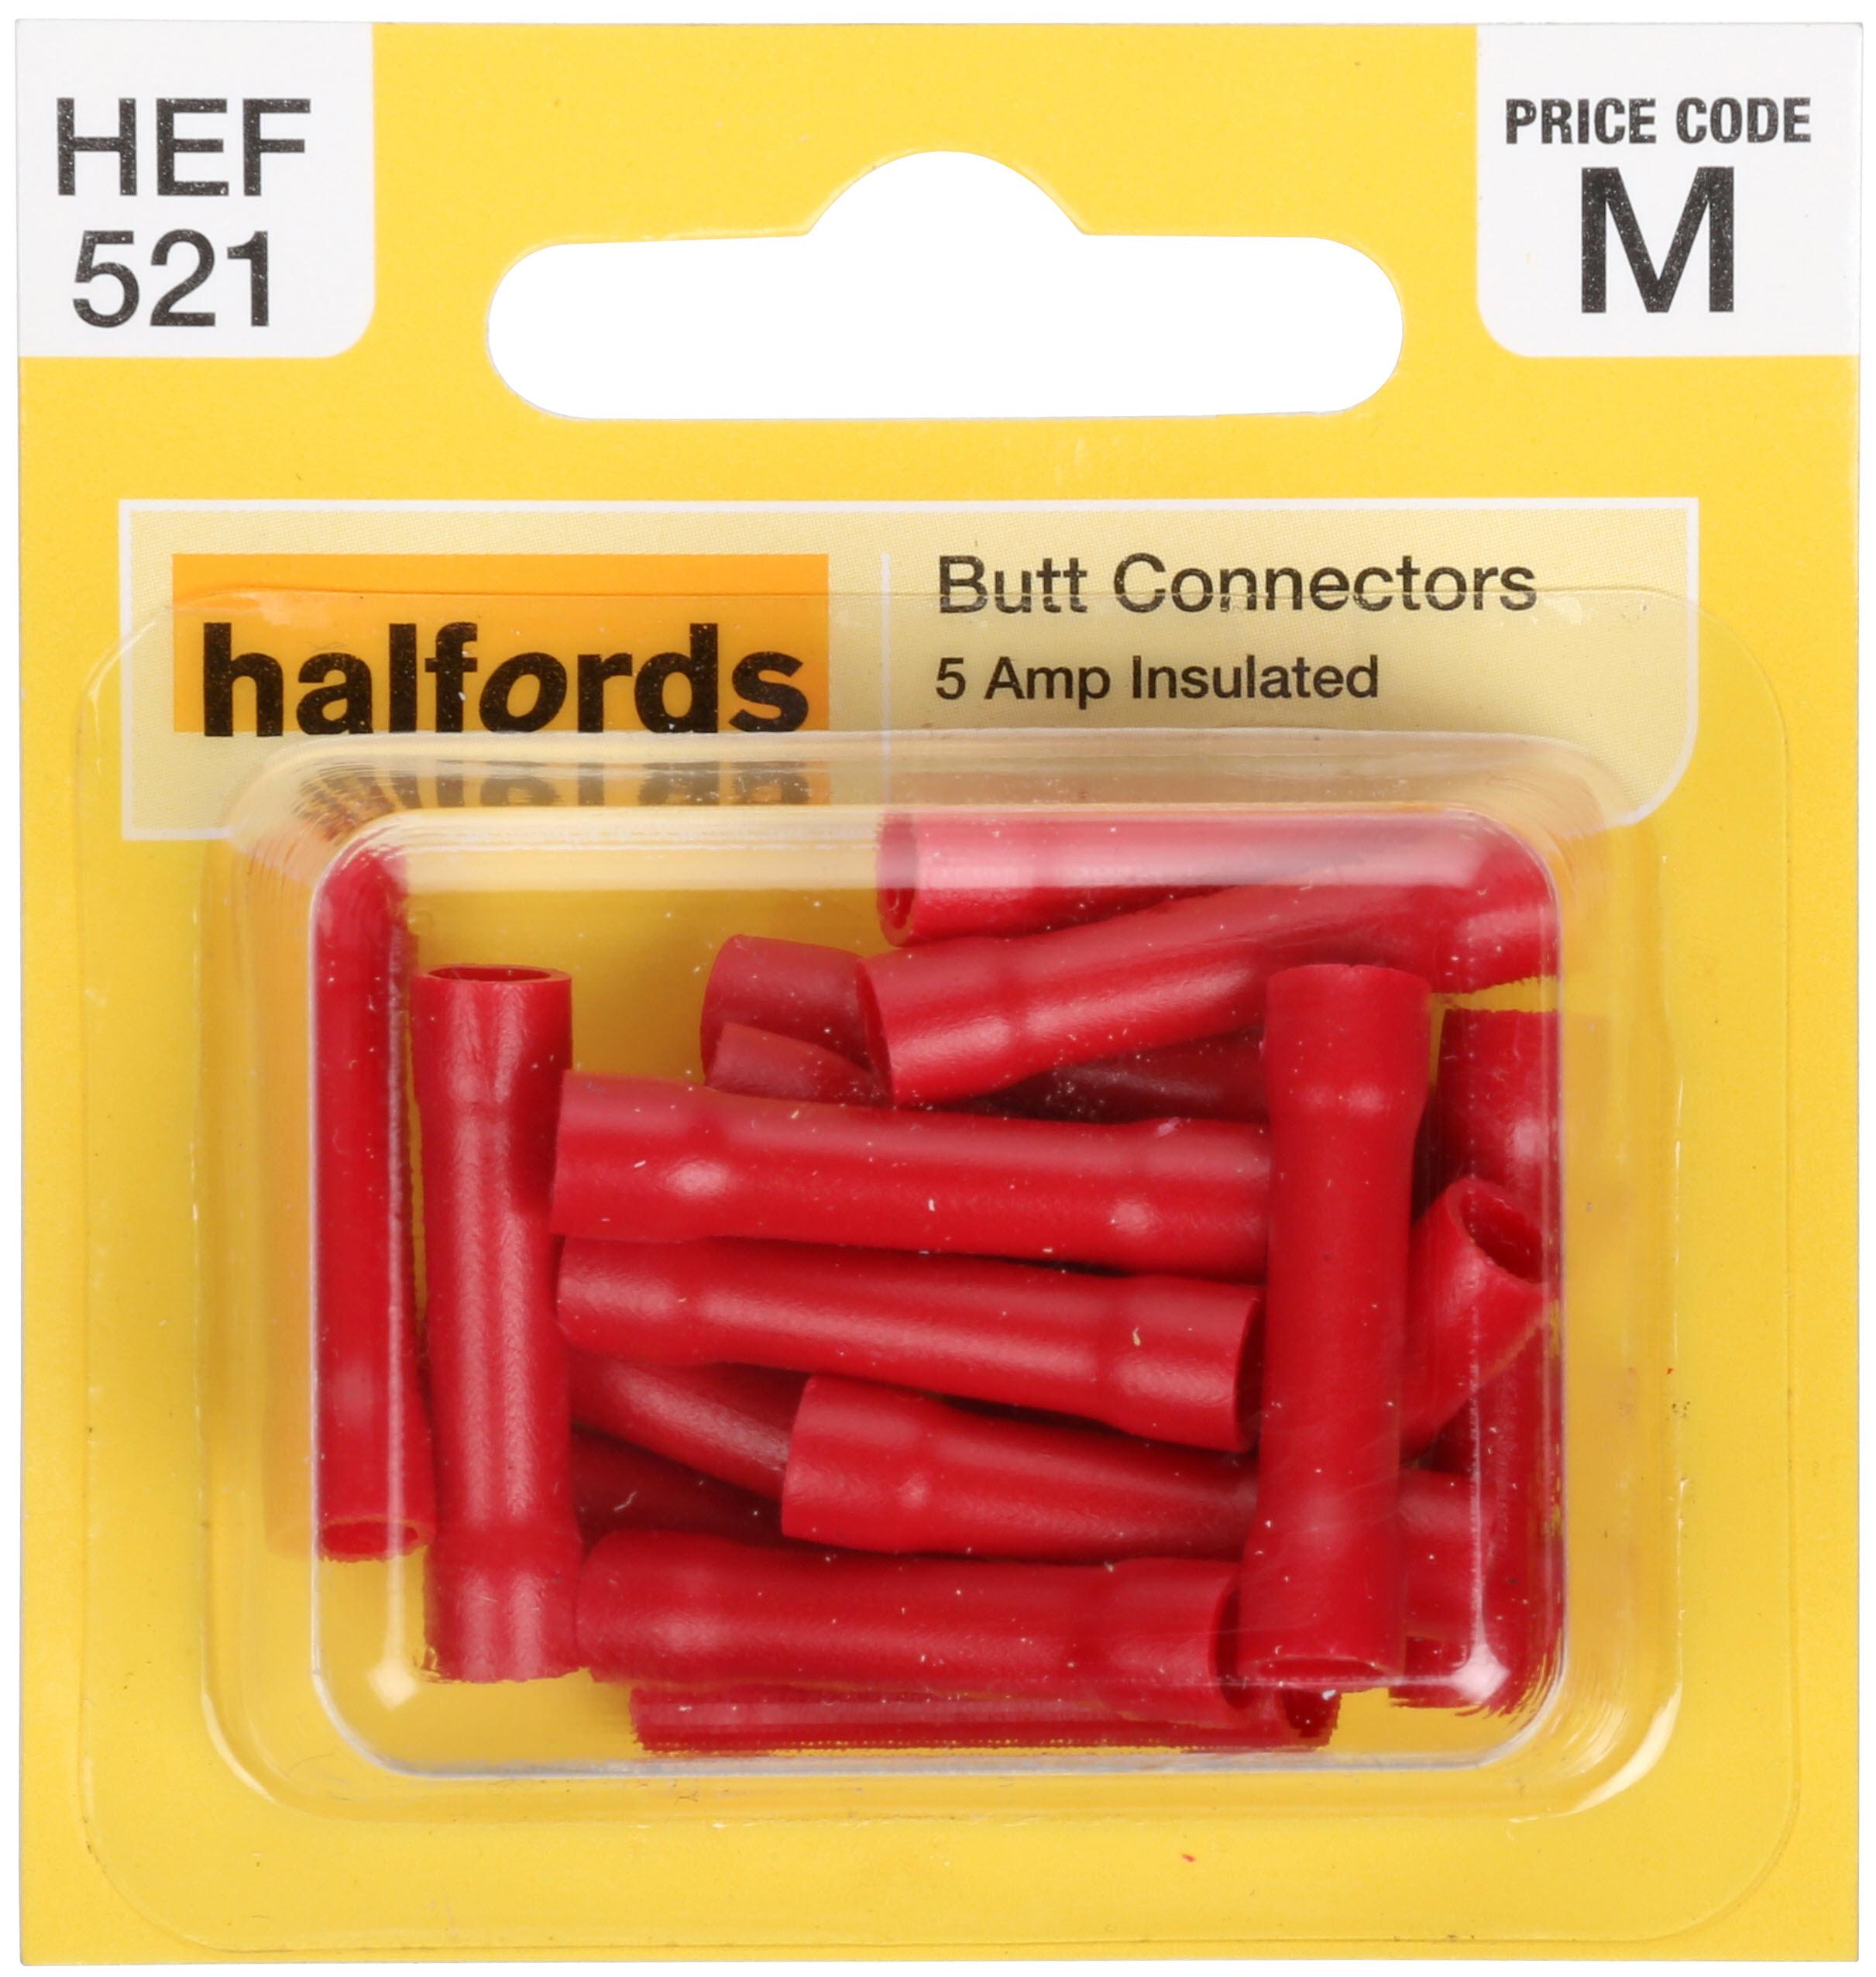 Halfords Butt Connectors (Hef521) 5 Amp